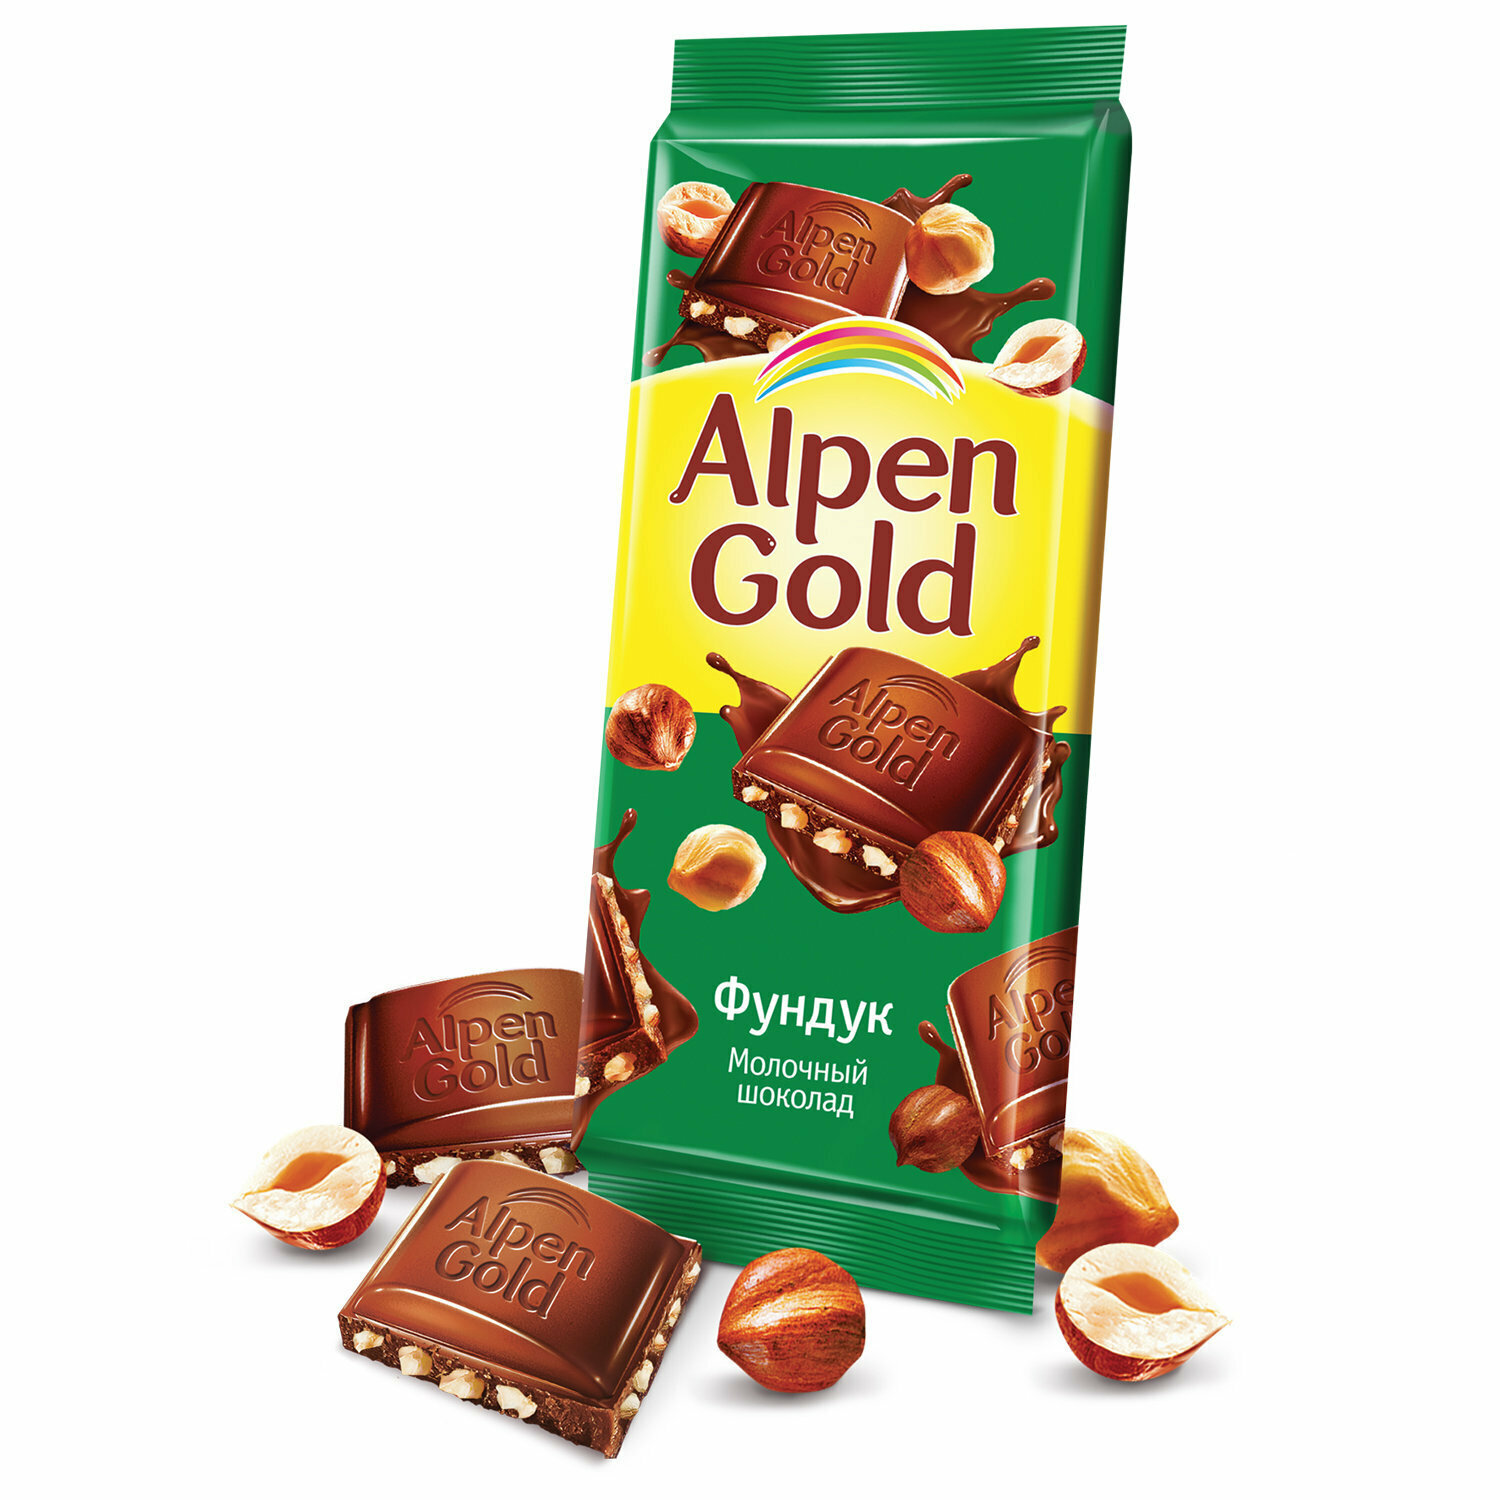 Шоколад ALPEN GOLD (альпен голд) молочный начинка дробленый фундук 85г